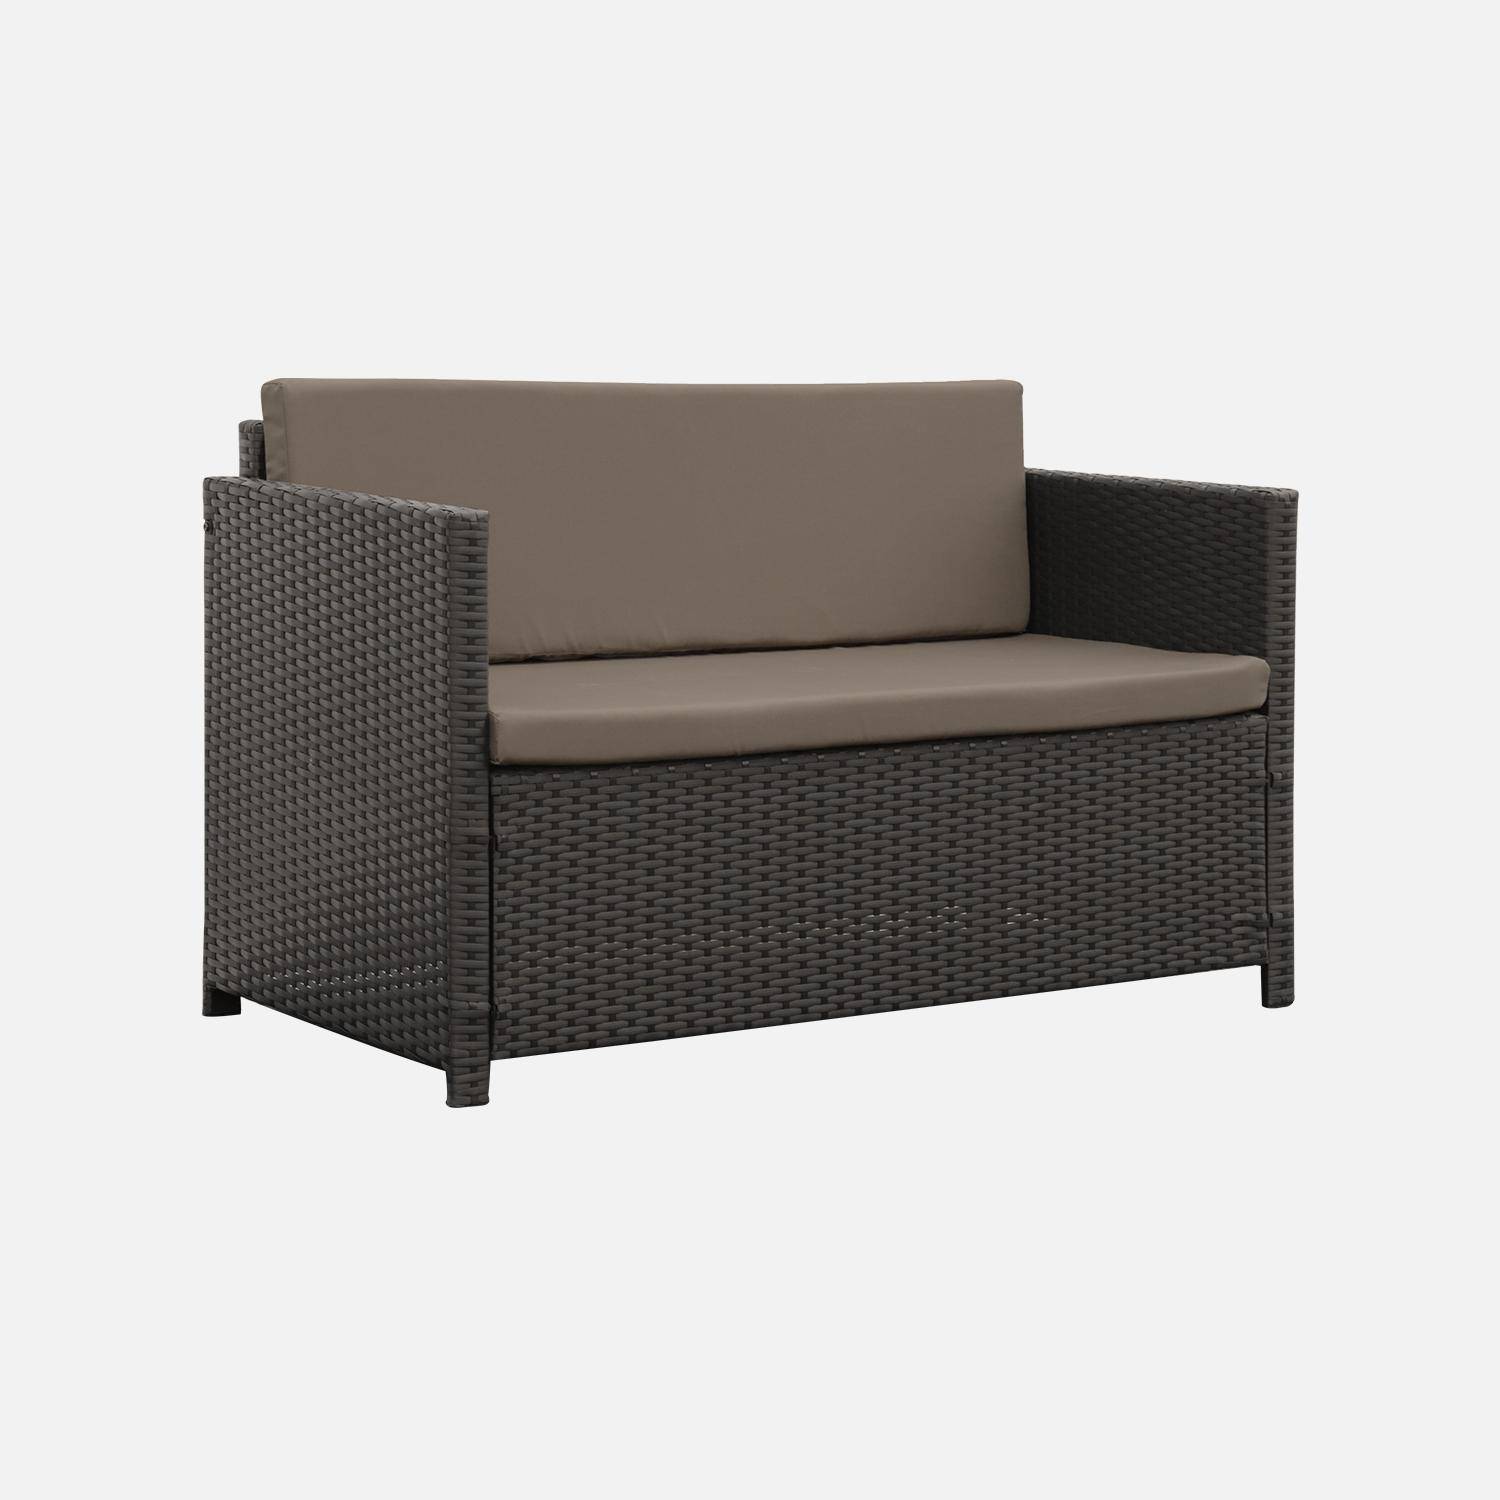 4-seater polyrattan garden sofa set - sofa, 2 armchairs, coffee table - Perugia - Brown rattan, Chocolate cushions,sweeek,Photo3